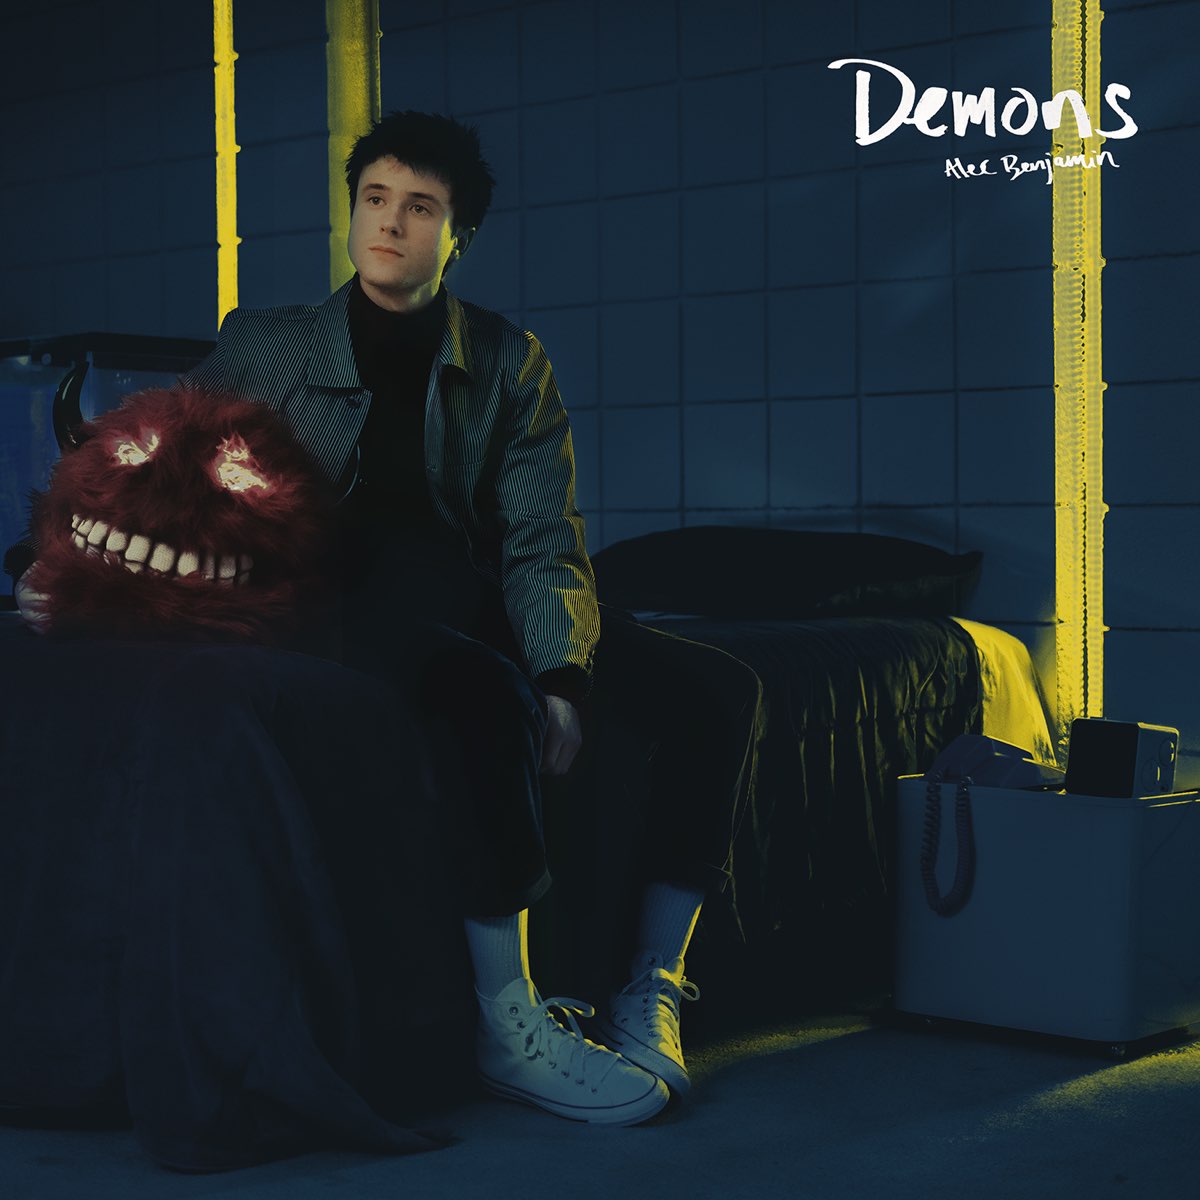 Demons alec benjamin lyrics